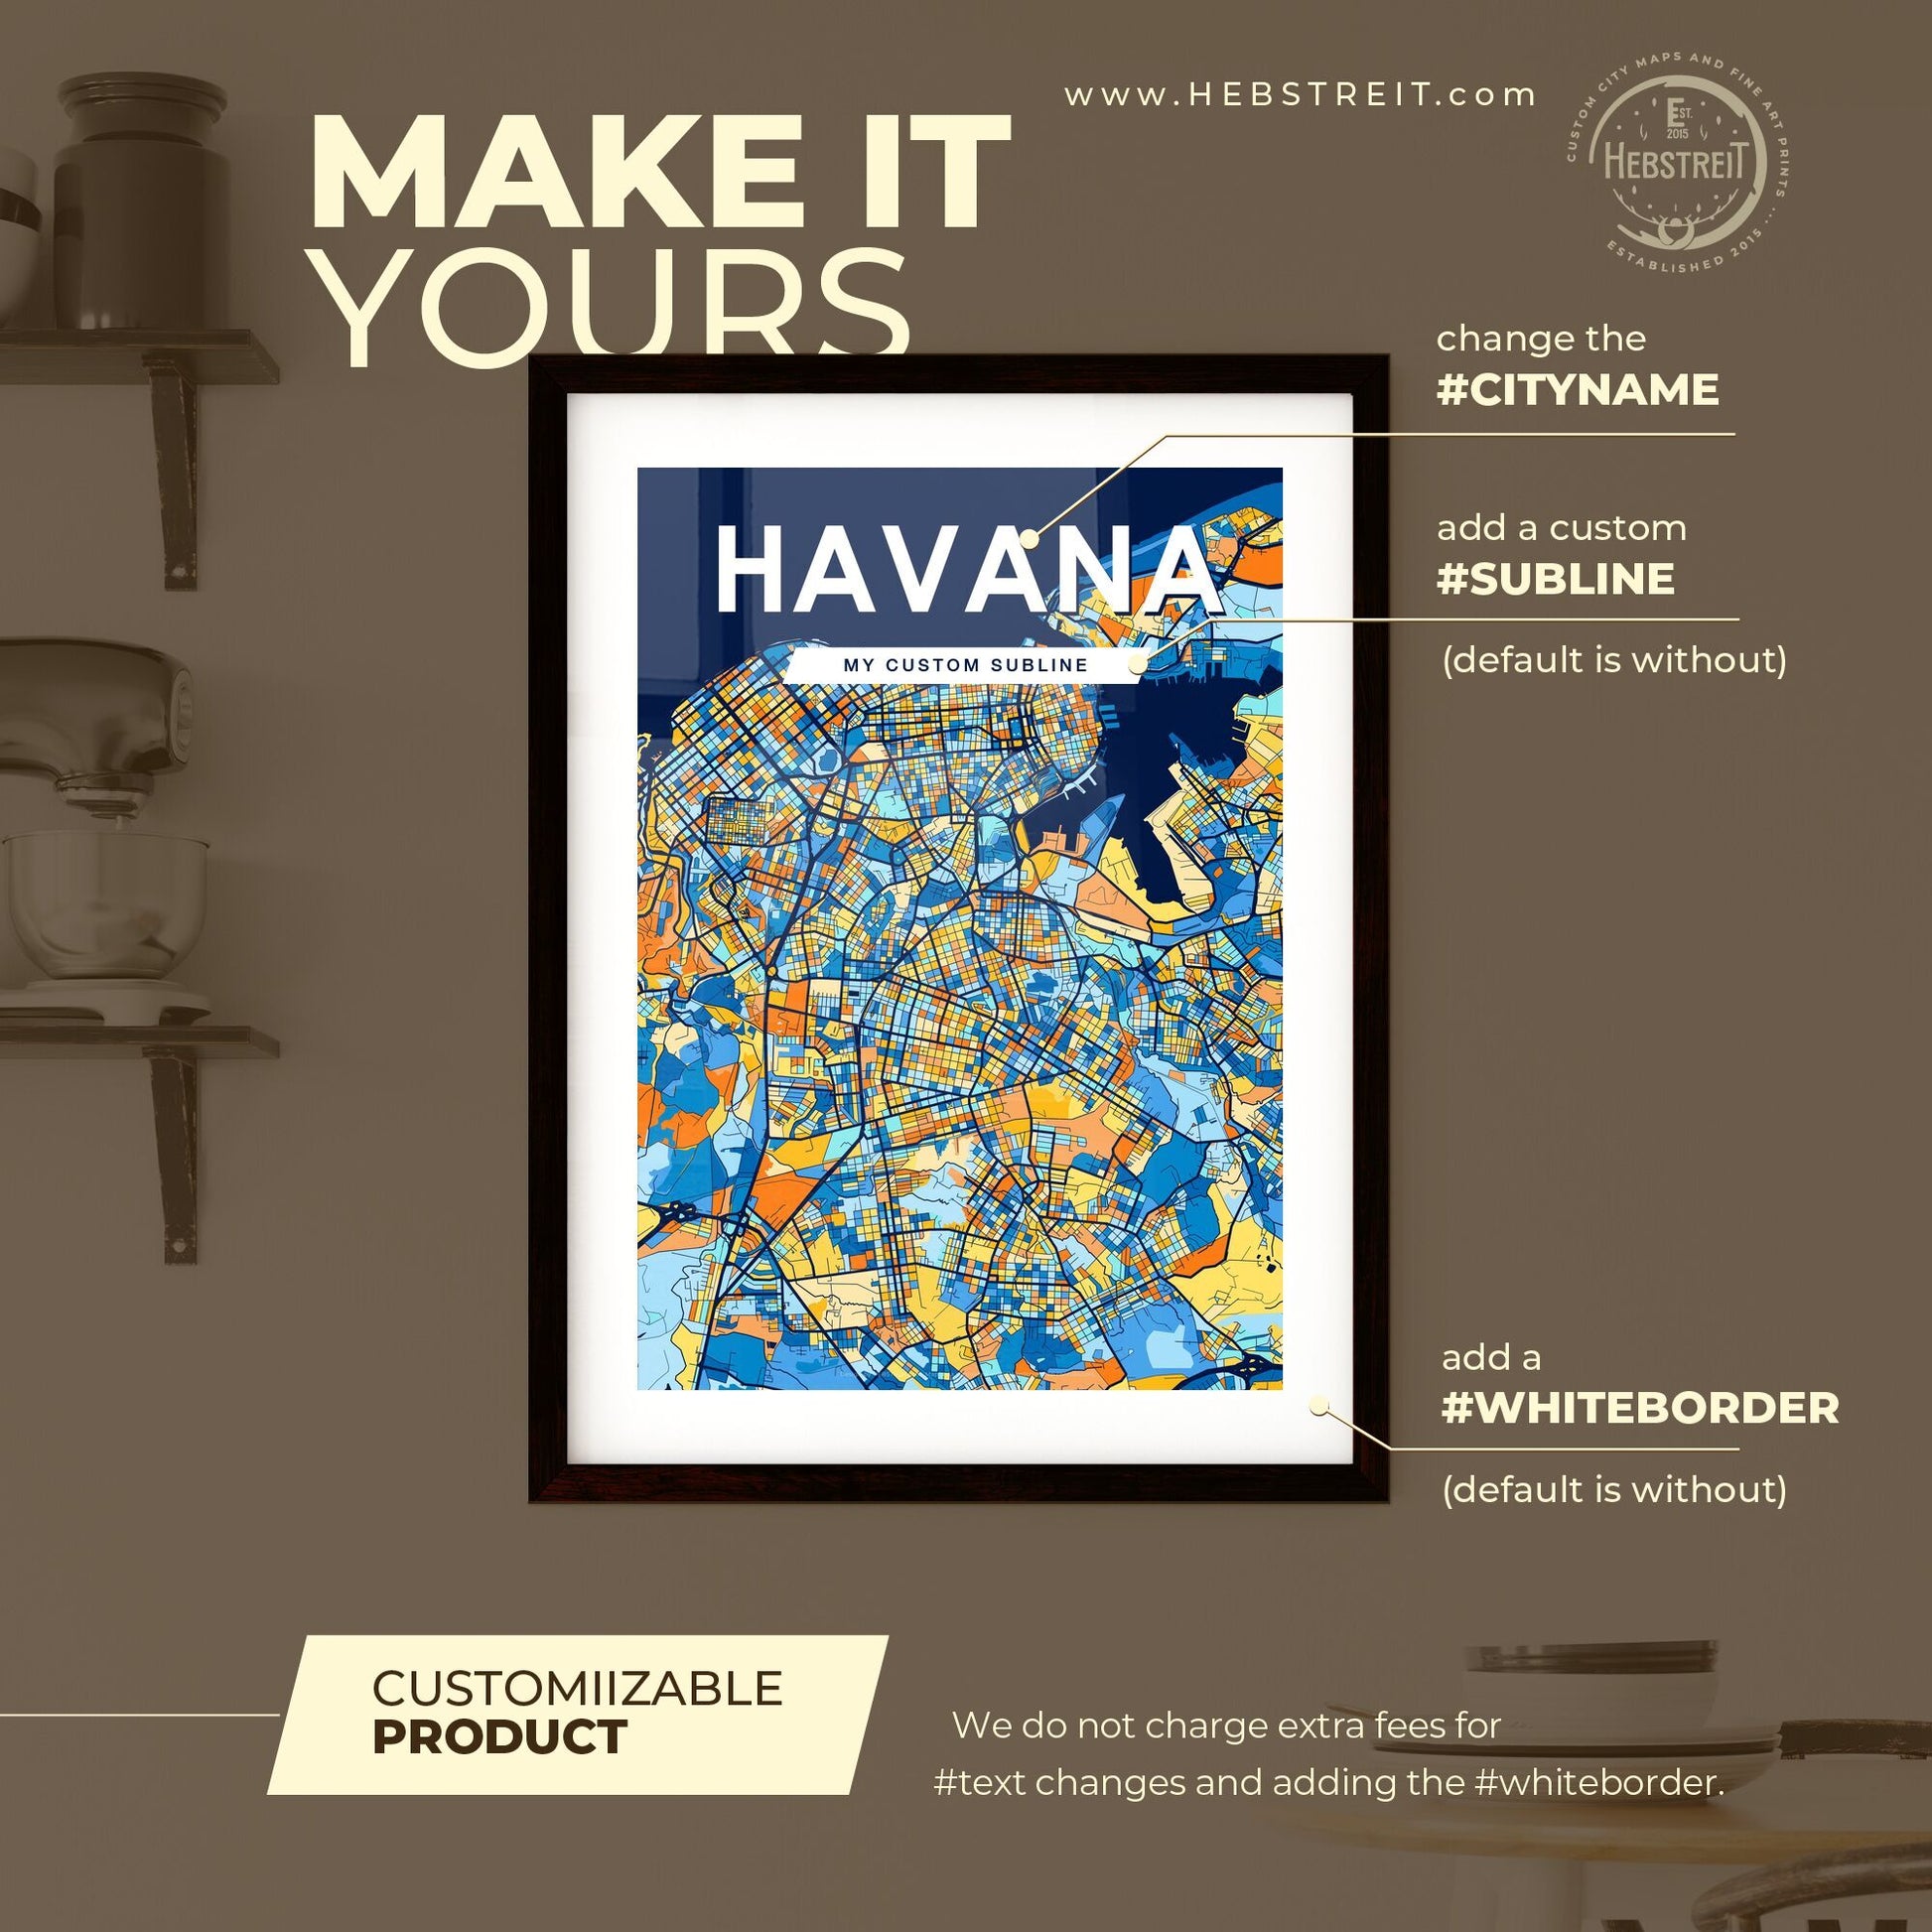 HAVANA CUBA Vibrant Colorful Art Map Poster Blue Orange